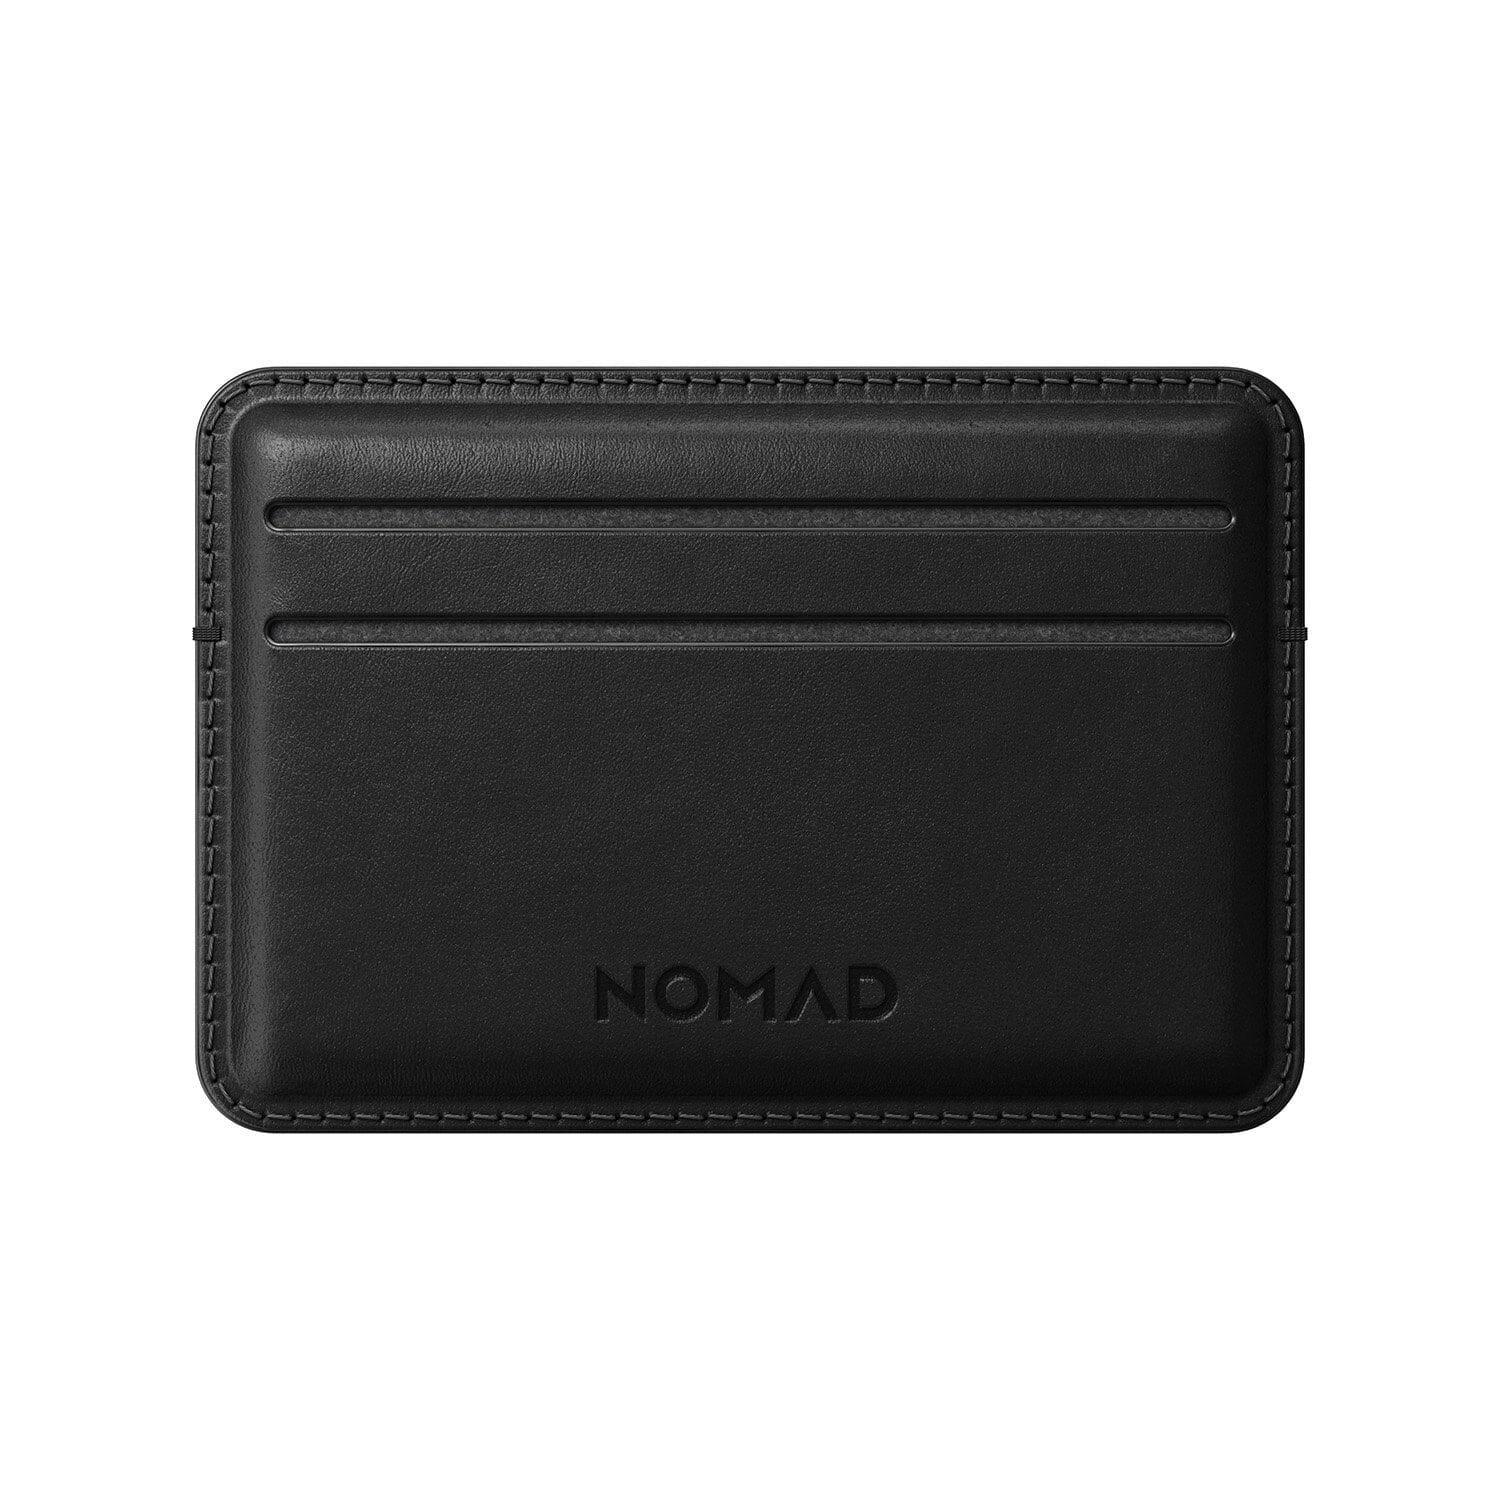 NOMAD Horween Leather Card Wallet, Rustic Brown/Black Wallet NOMAD 